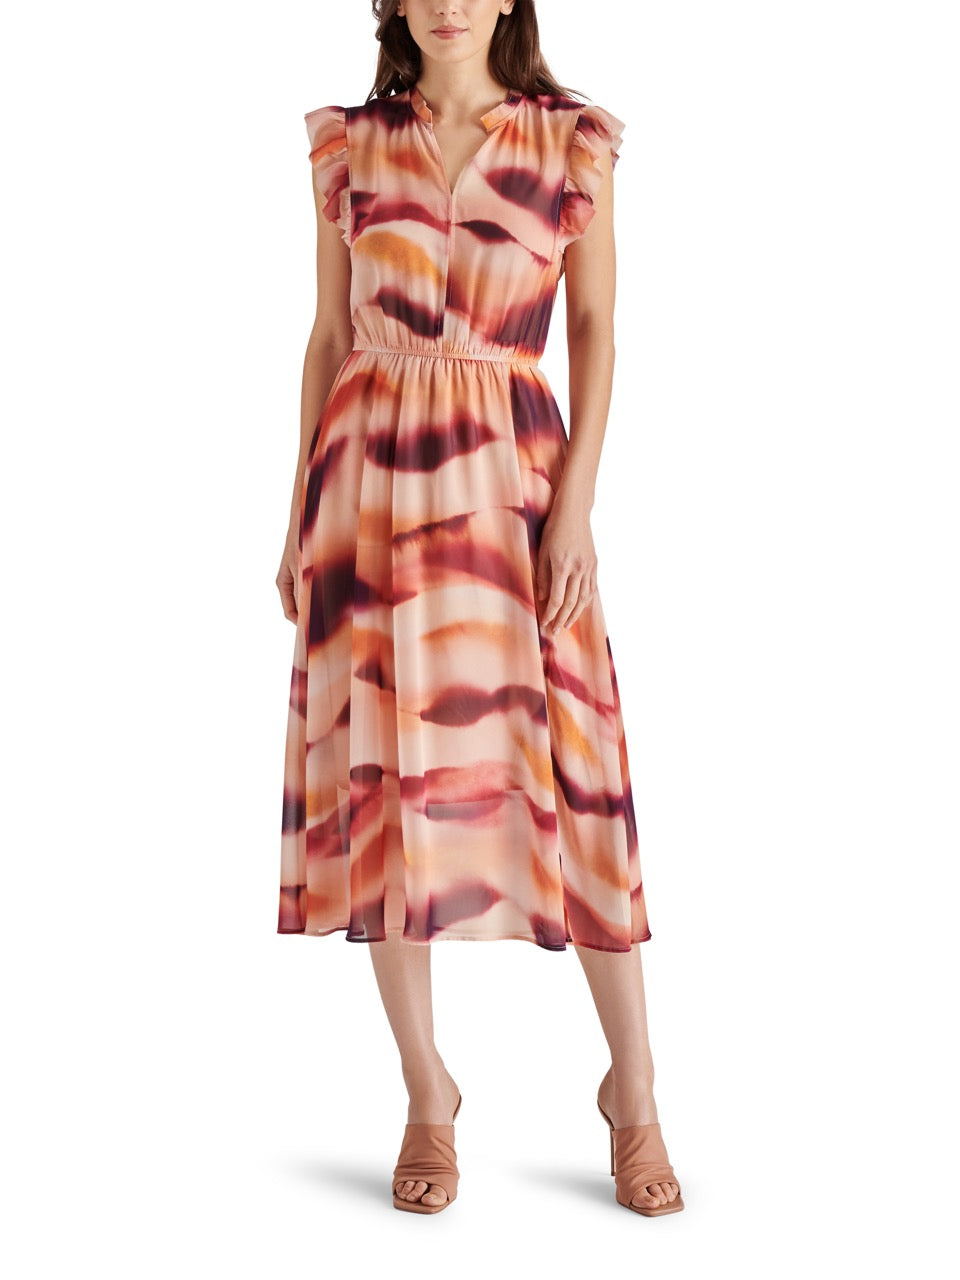 Steve Madden Allegra Abstract Print Dress - Rosewater- front view